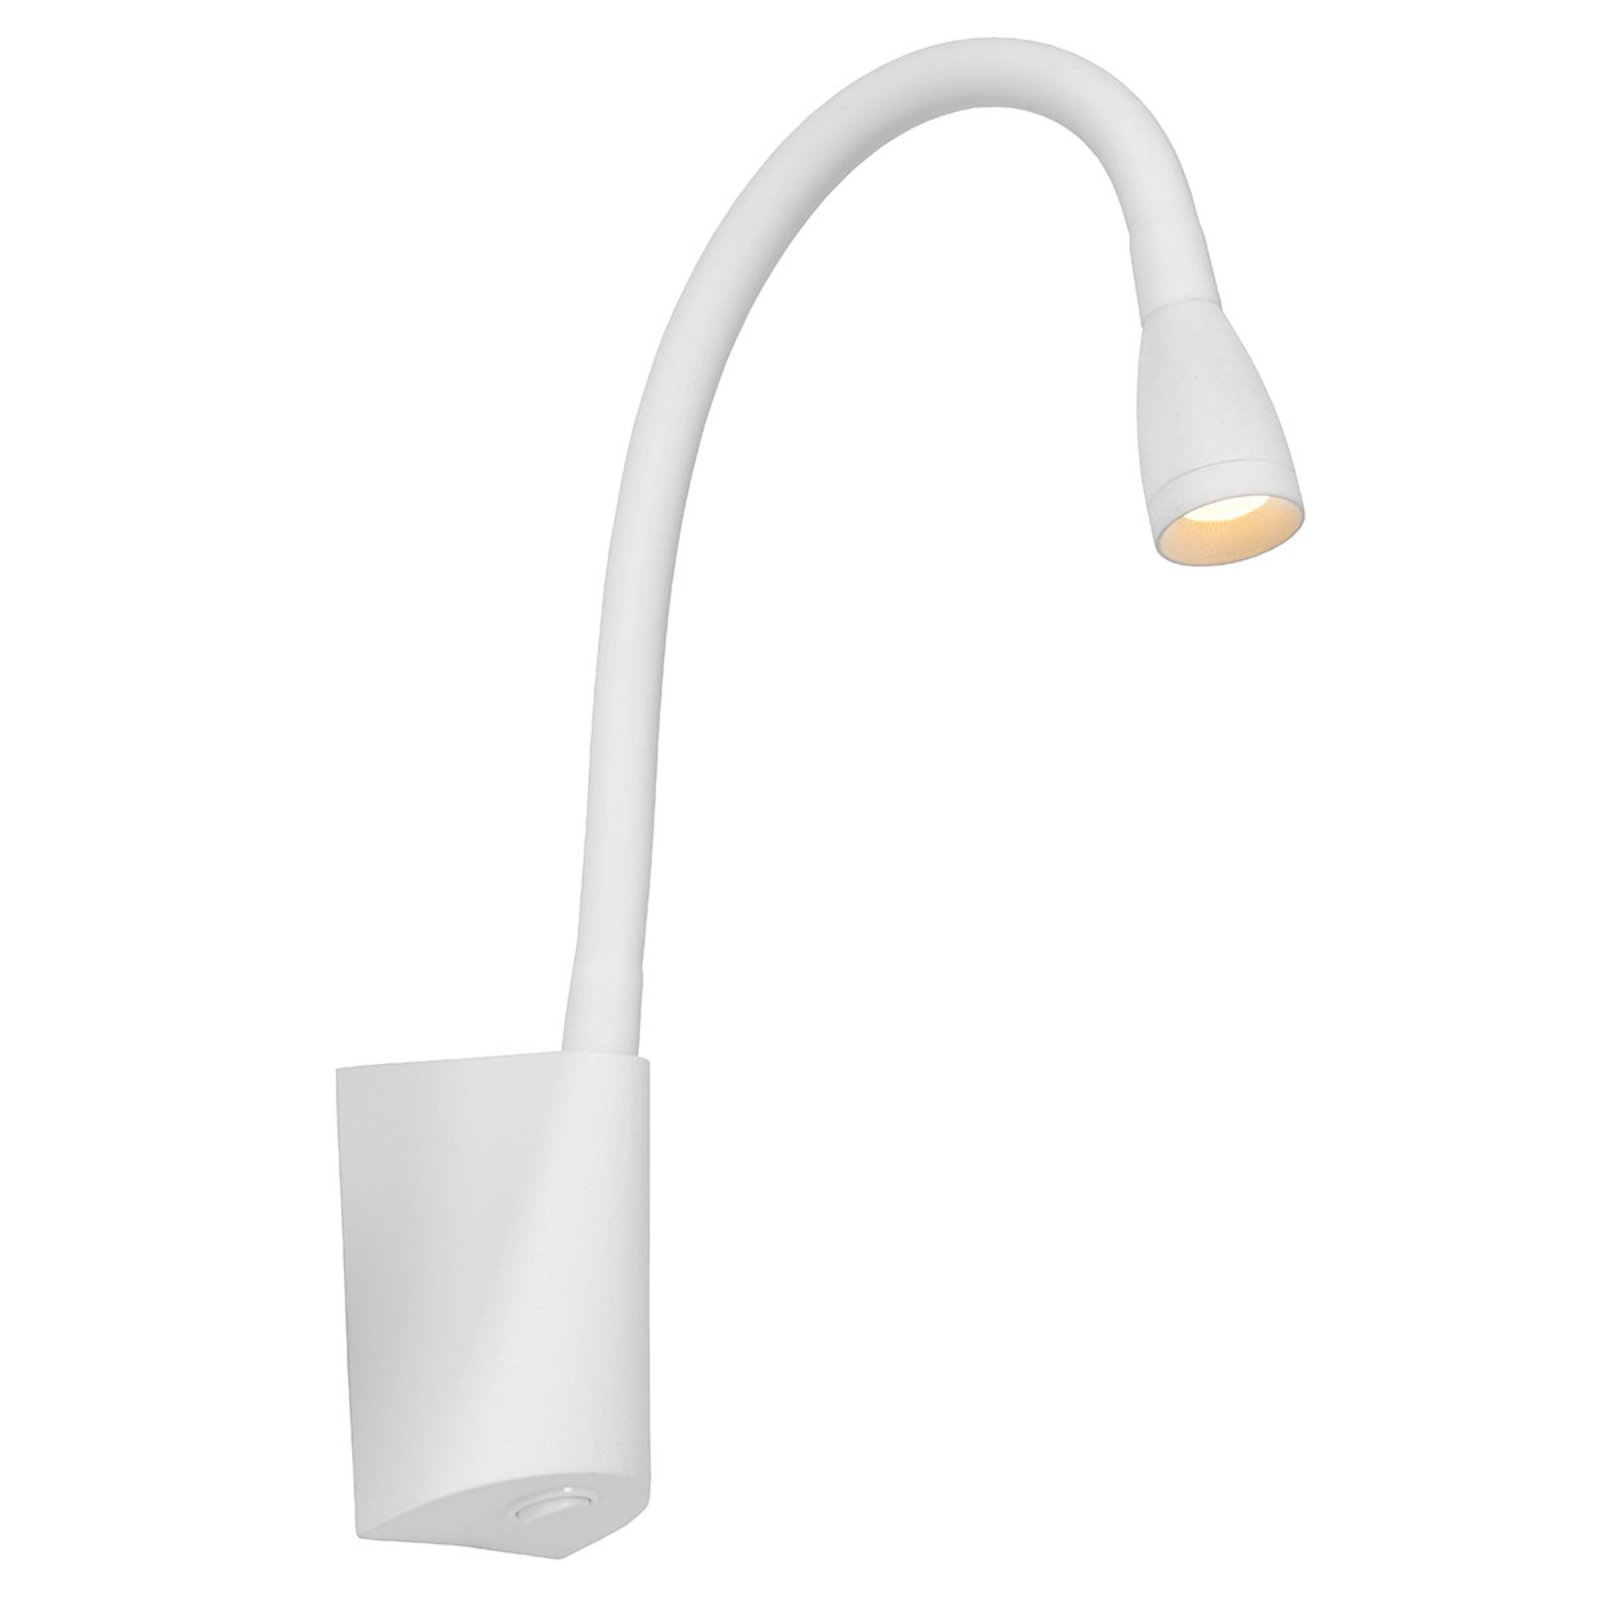 Gale buigbare LED wandlamp in wit